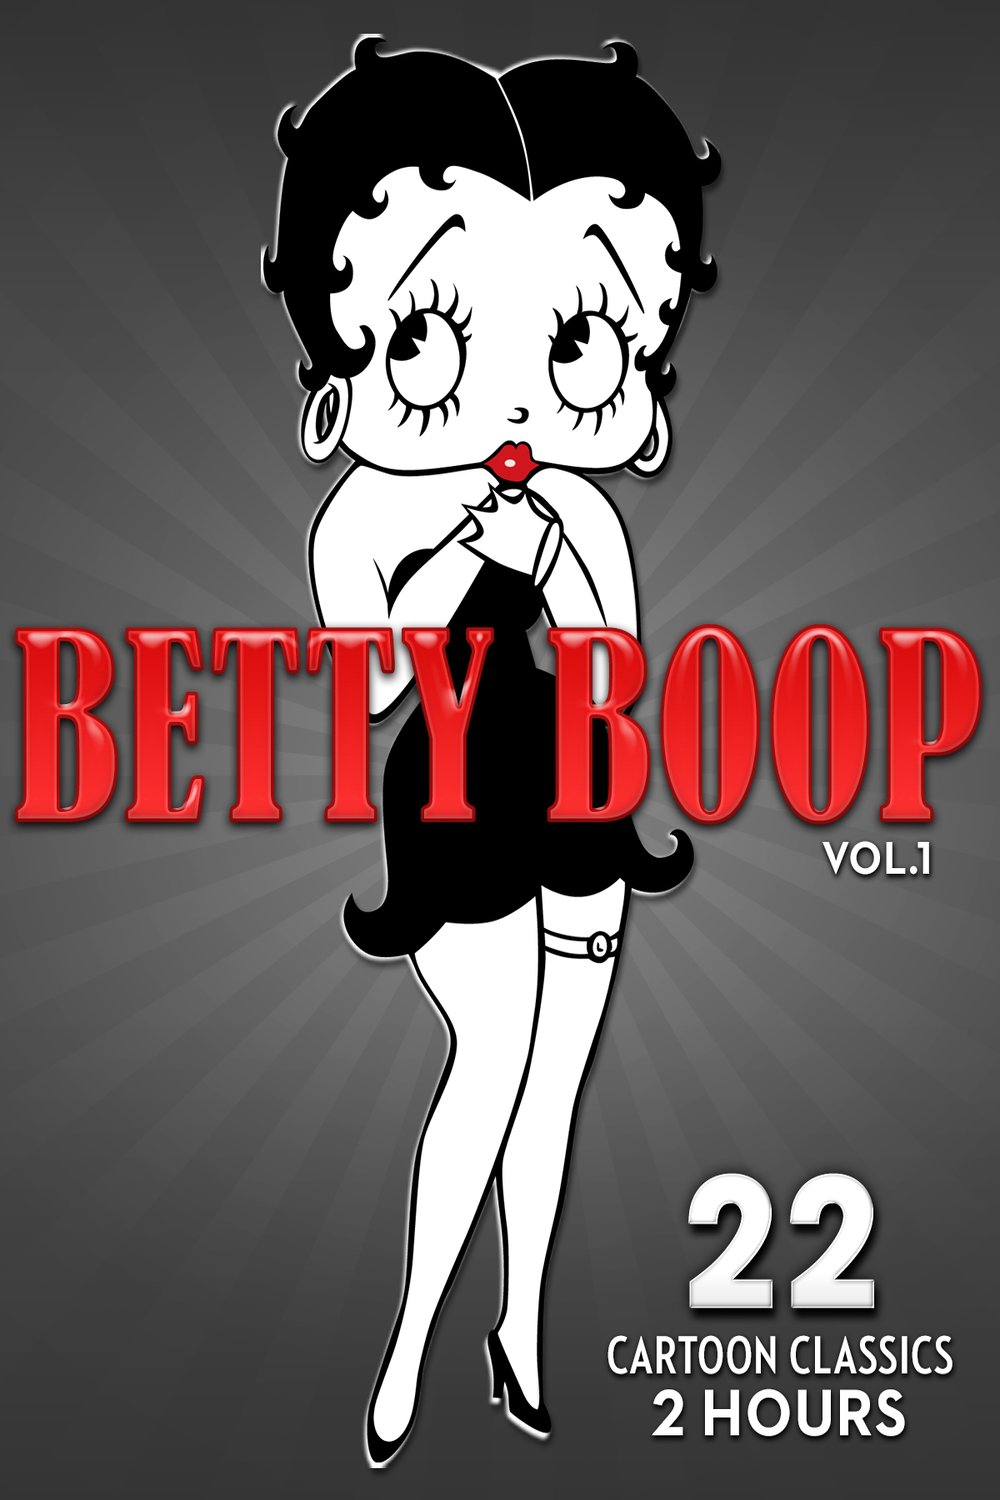 Betty Boop - Vol. 1: 22 Cartoon Classics - 2 Hours (2017) by Max Fleischer